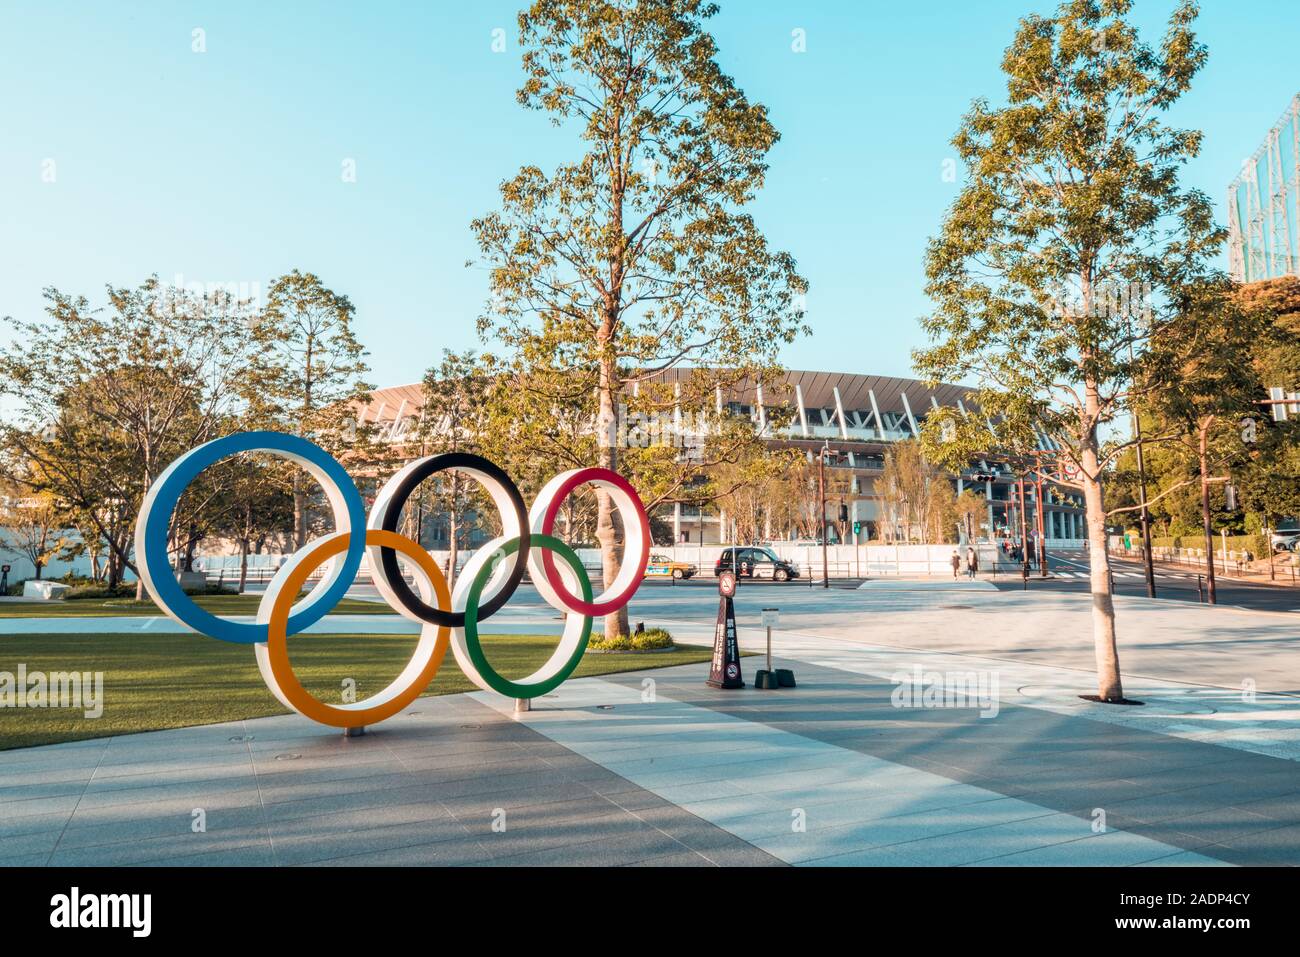 Tokyo, Japan - Nov 1, 2019: Olympic symbol logo at Japan New National Stadium in Shinjuku. Tokyo Summer Olympic 2020 host venue Stock Photo